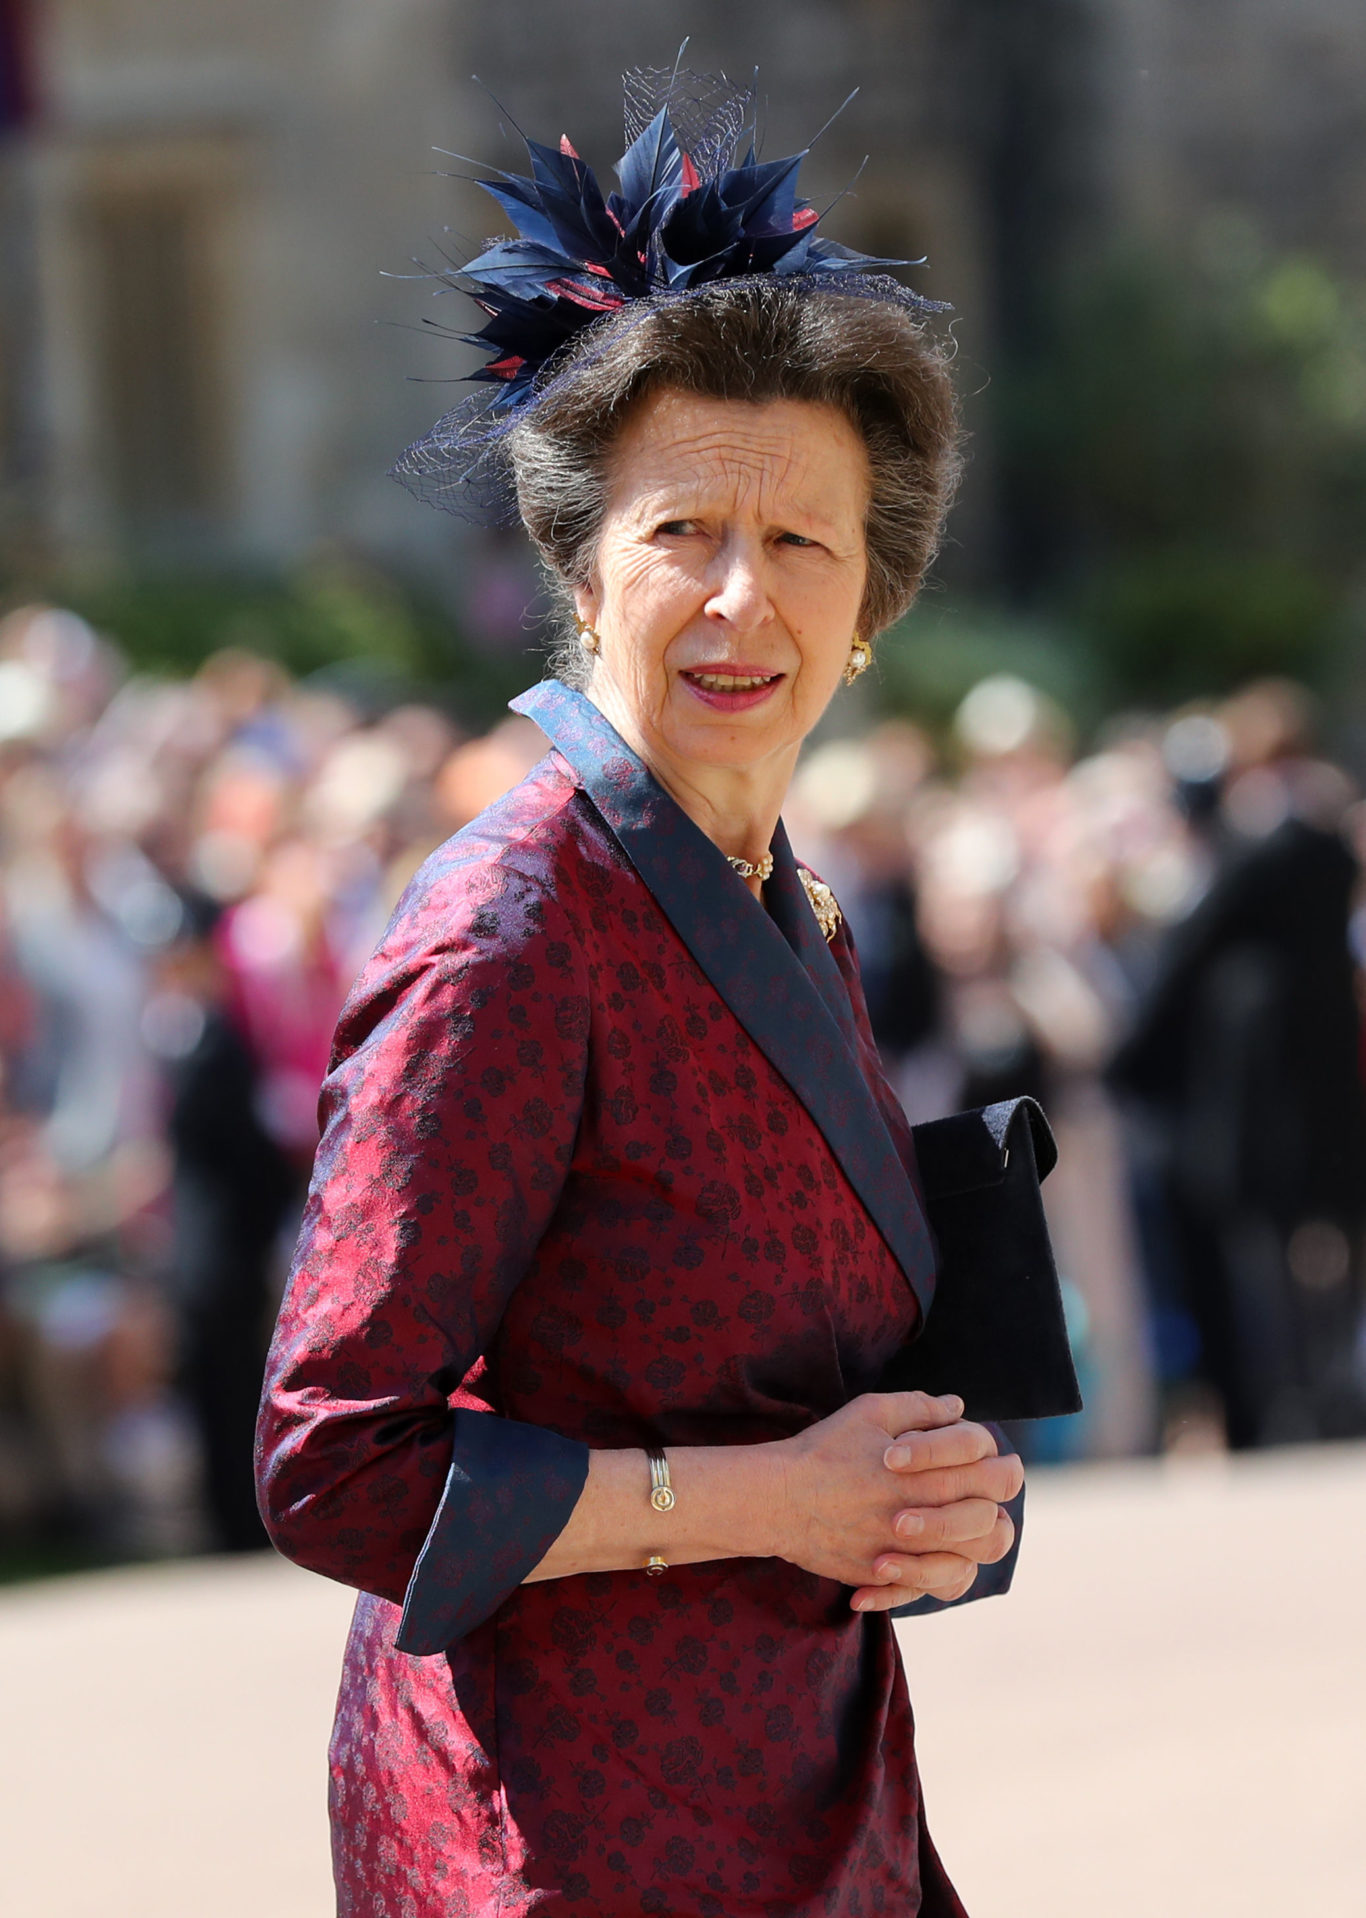 The Princess Royal in a striking outfit (Gareth Fuller/PA)